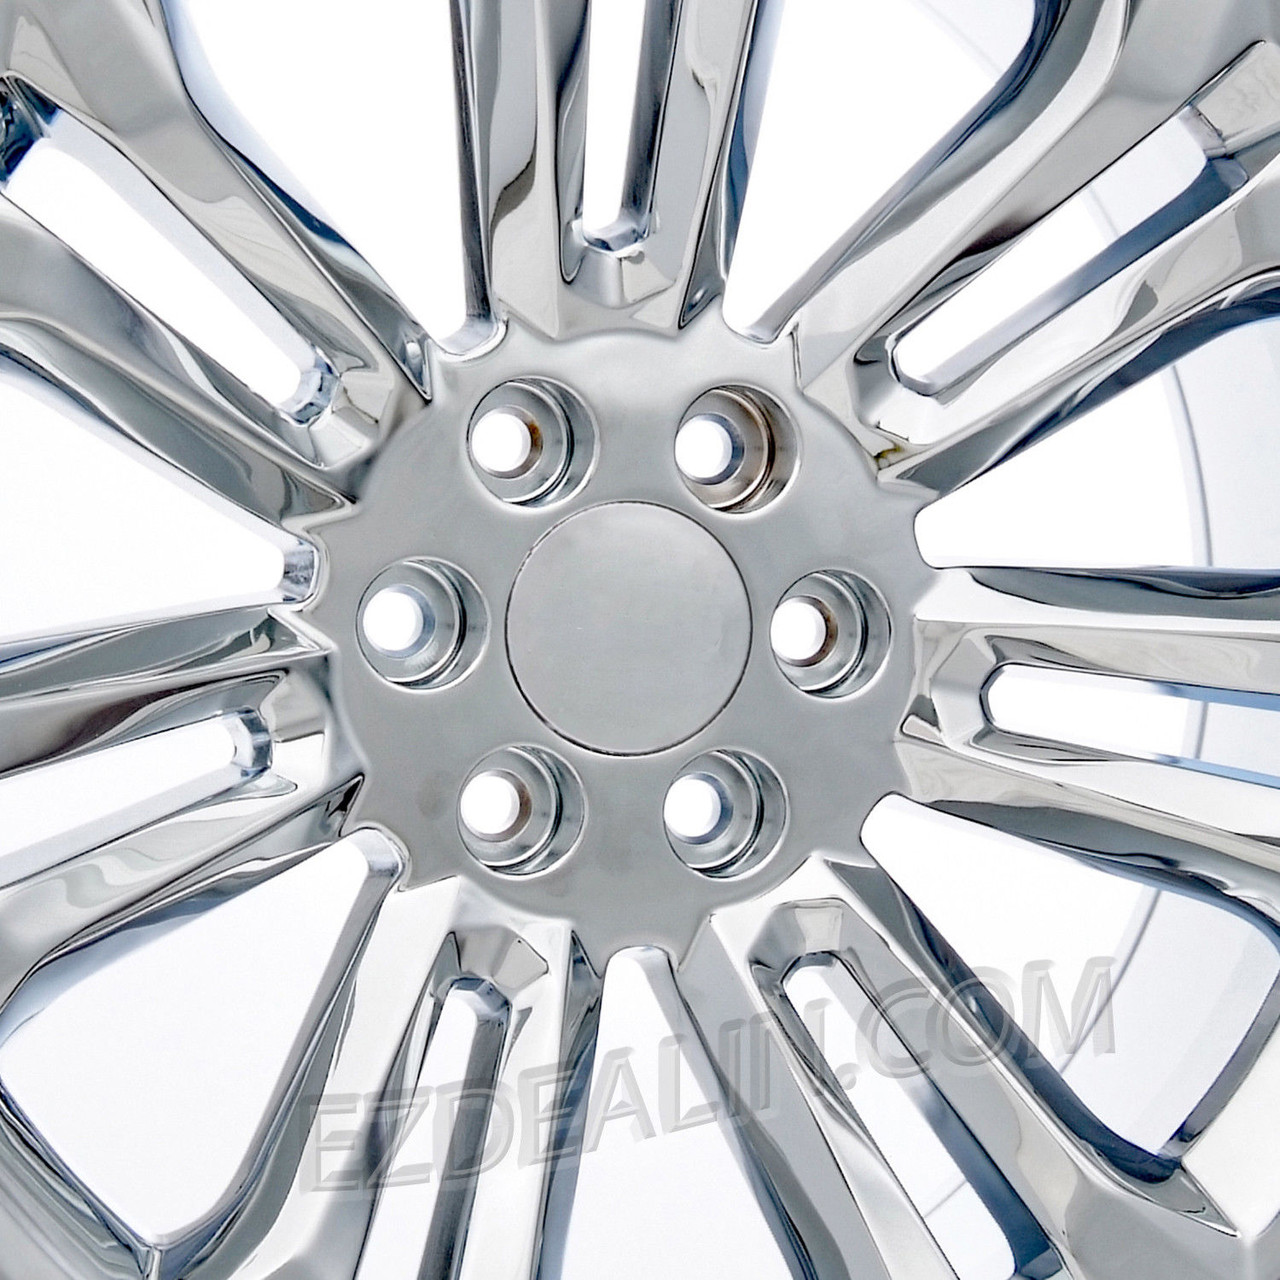 Chrome 22" New Style Split Spoke Wheels with Bridgestone Tires for GMC Sierra, Yukon, Denali - New Set of 4